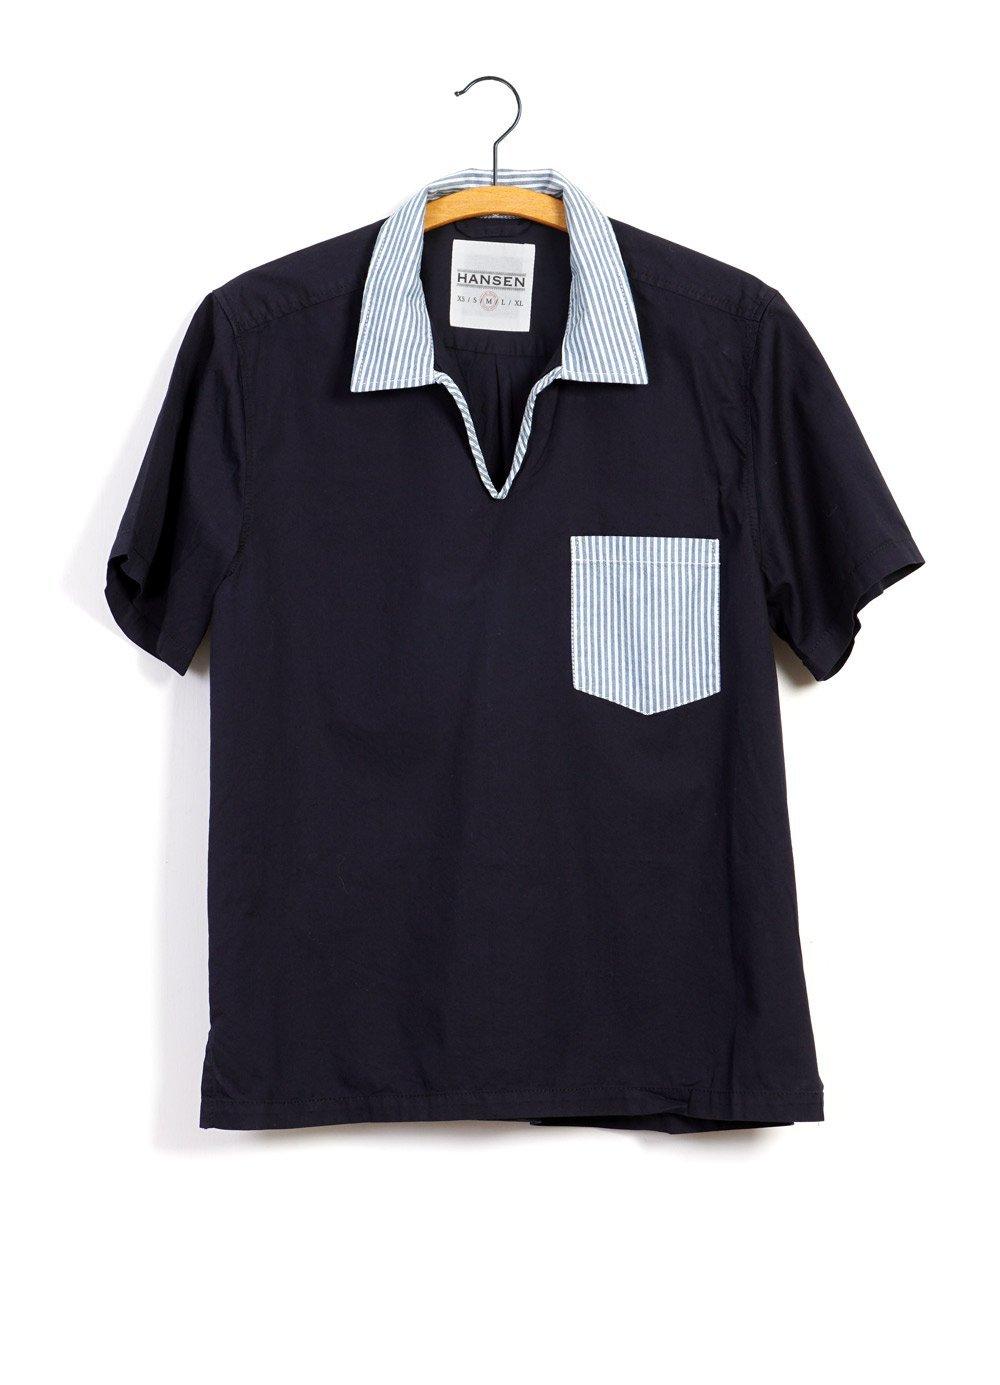 PHILLIP | Short Sleeve Pull-On Shirt | Navy/Stripe -HANSEN Garments- HANSEN Garments